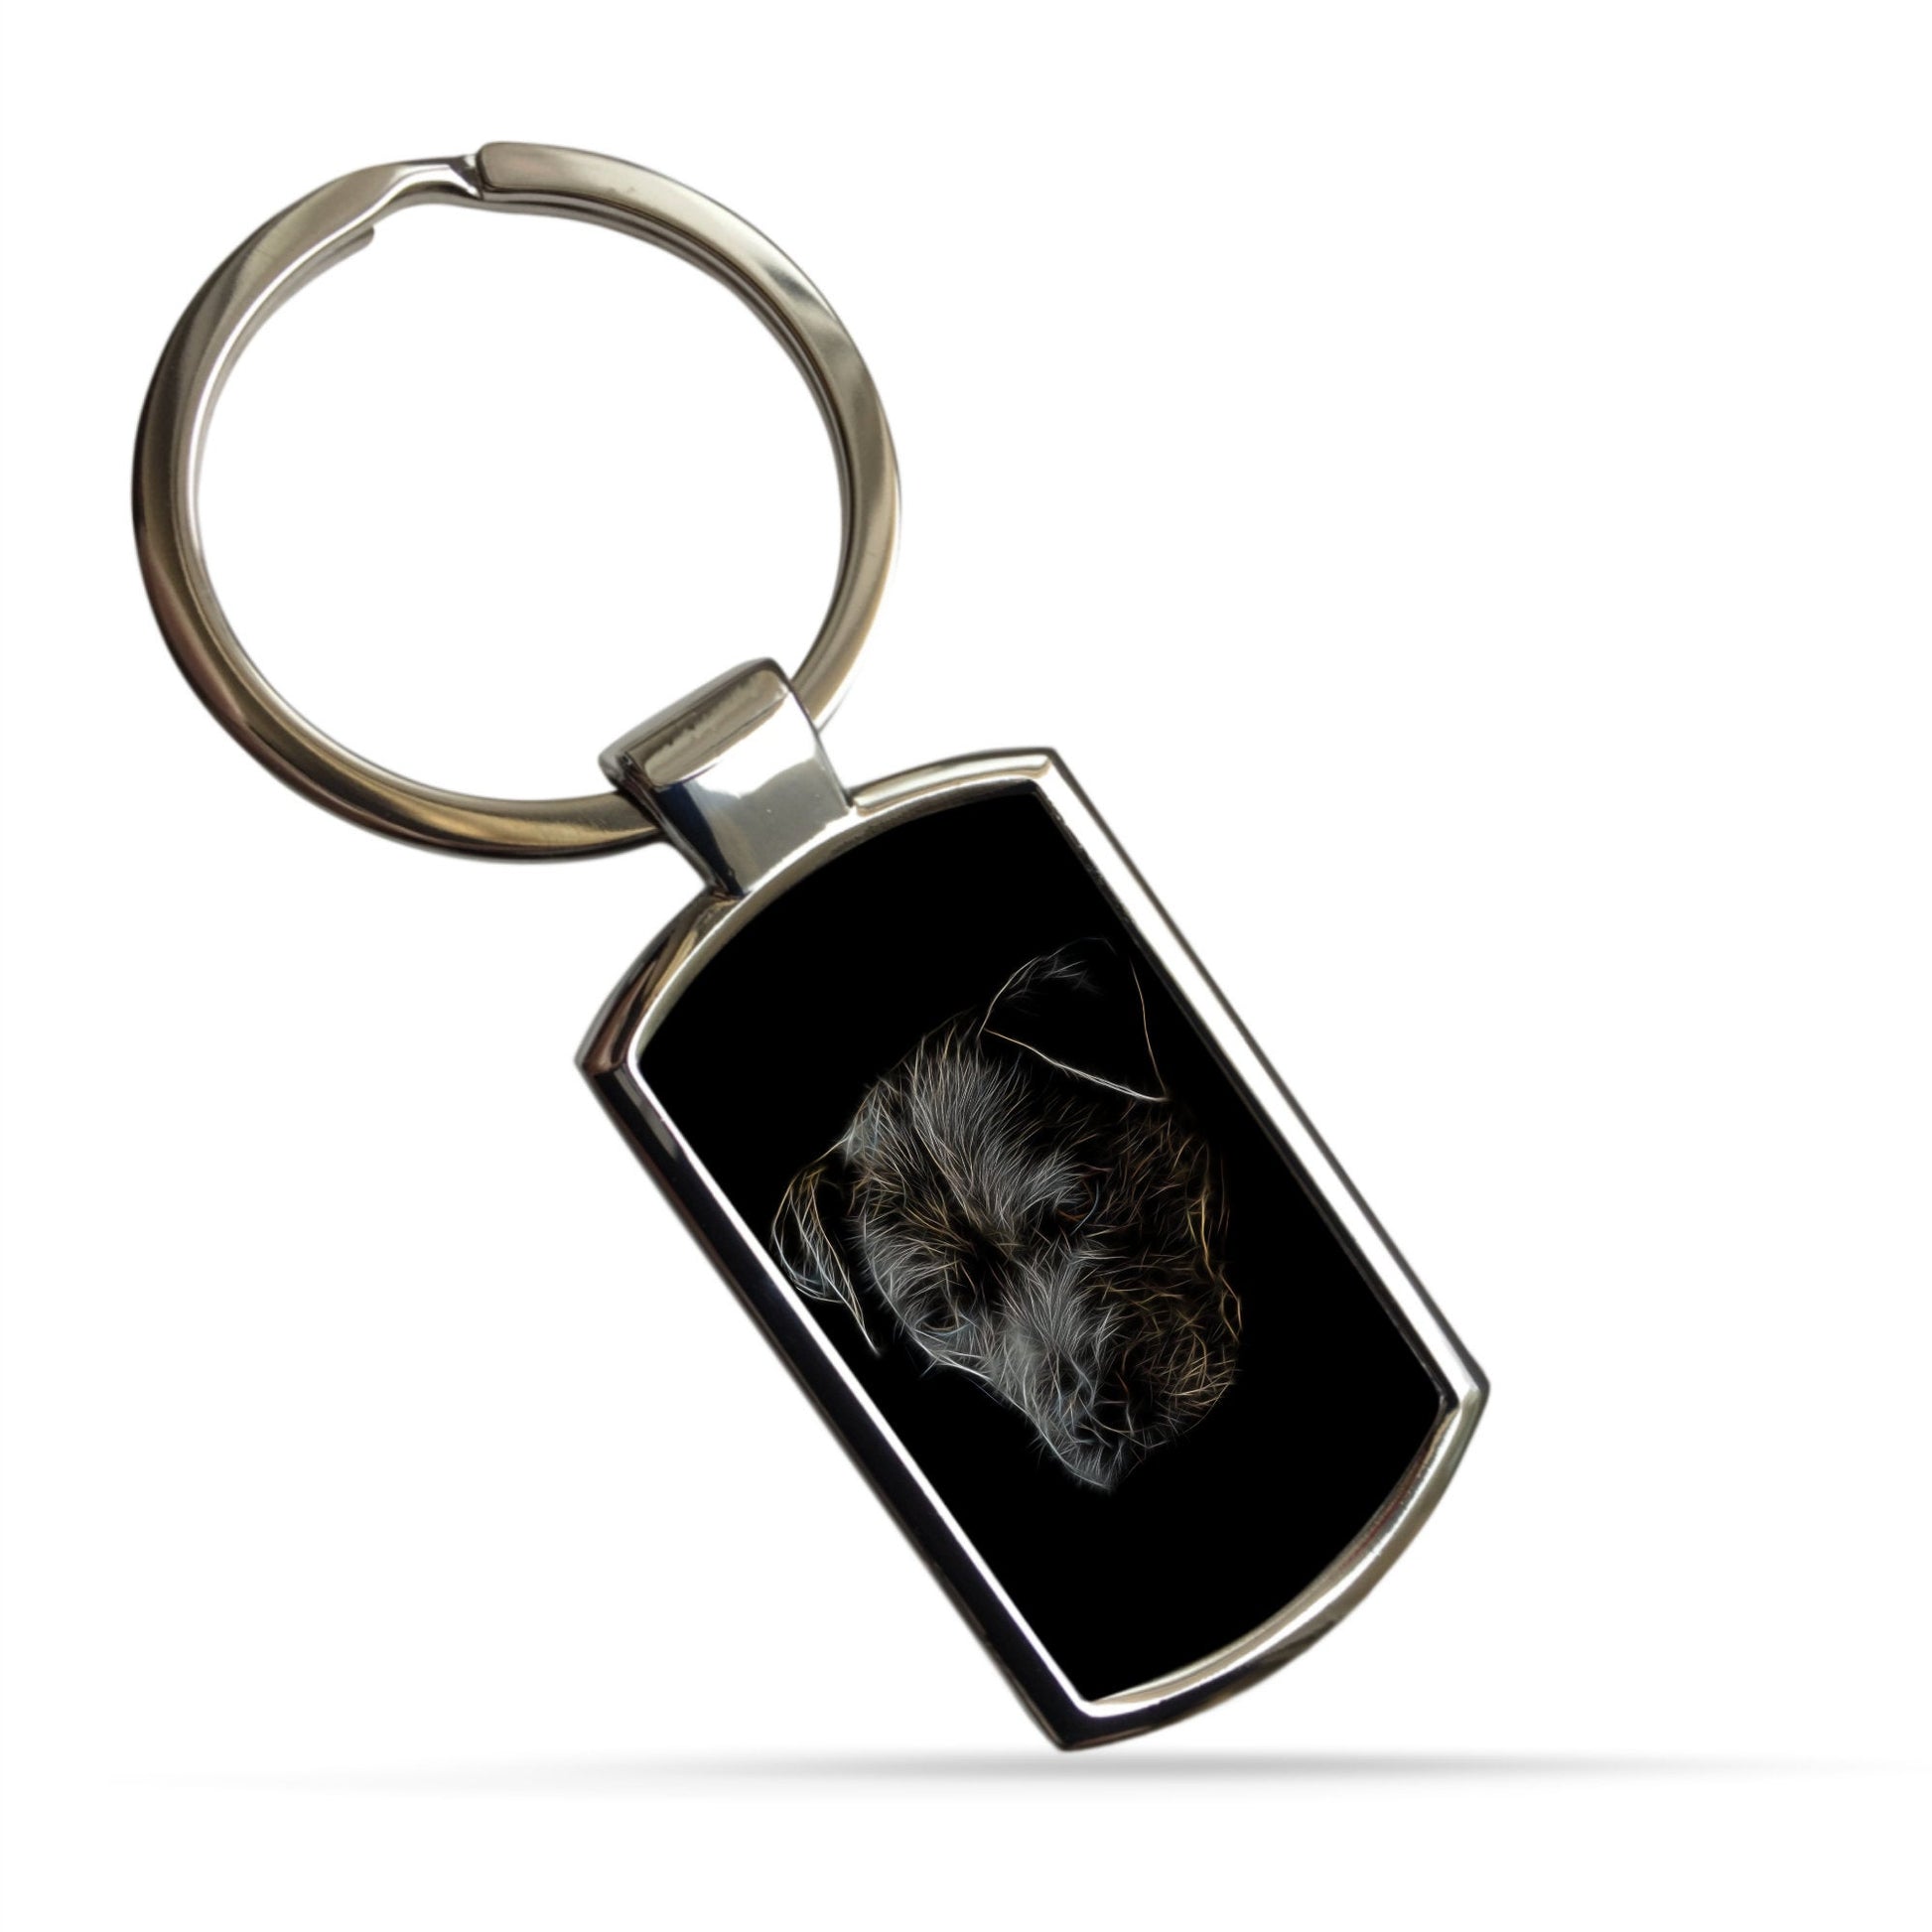 Black Staffordshire Bull Terrier Metal Keychain with Fractal Art Design.